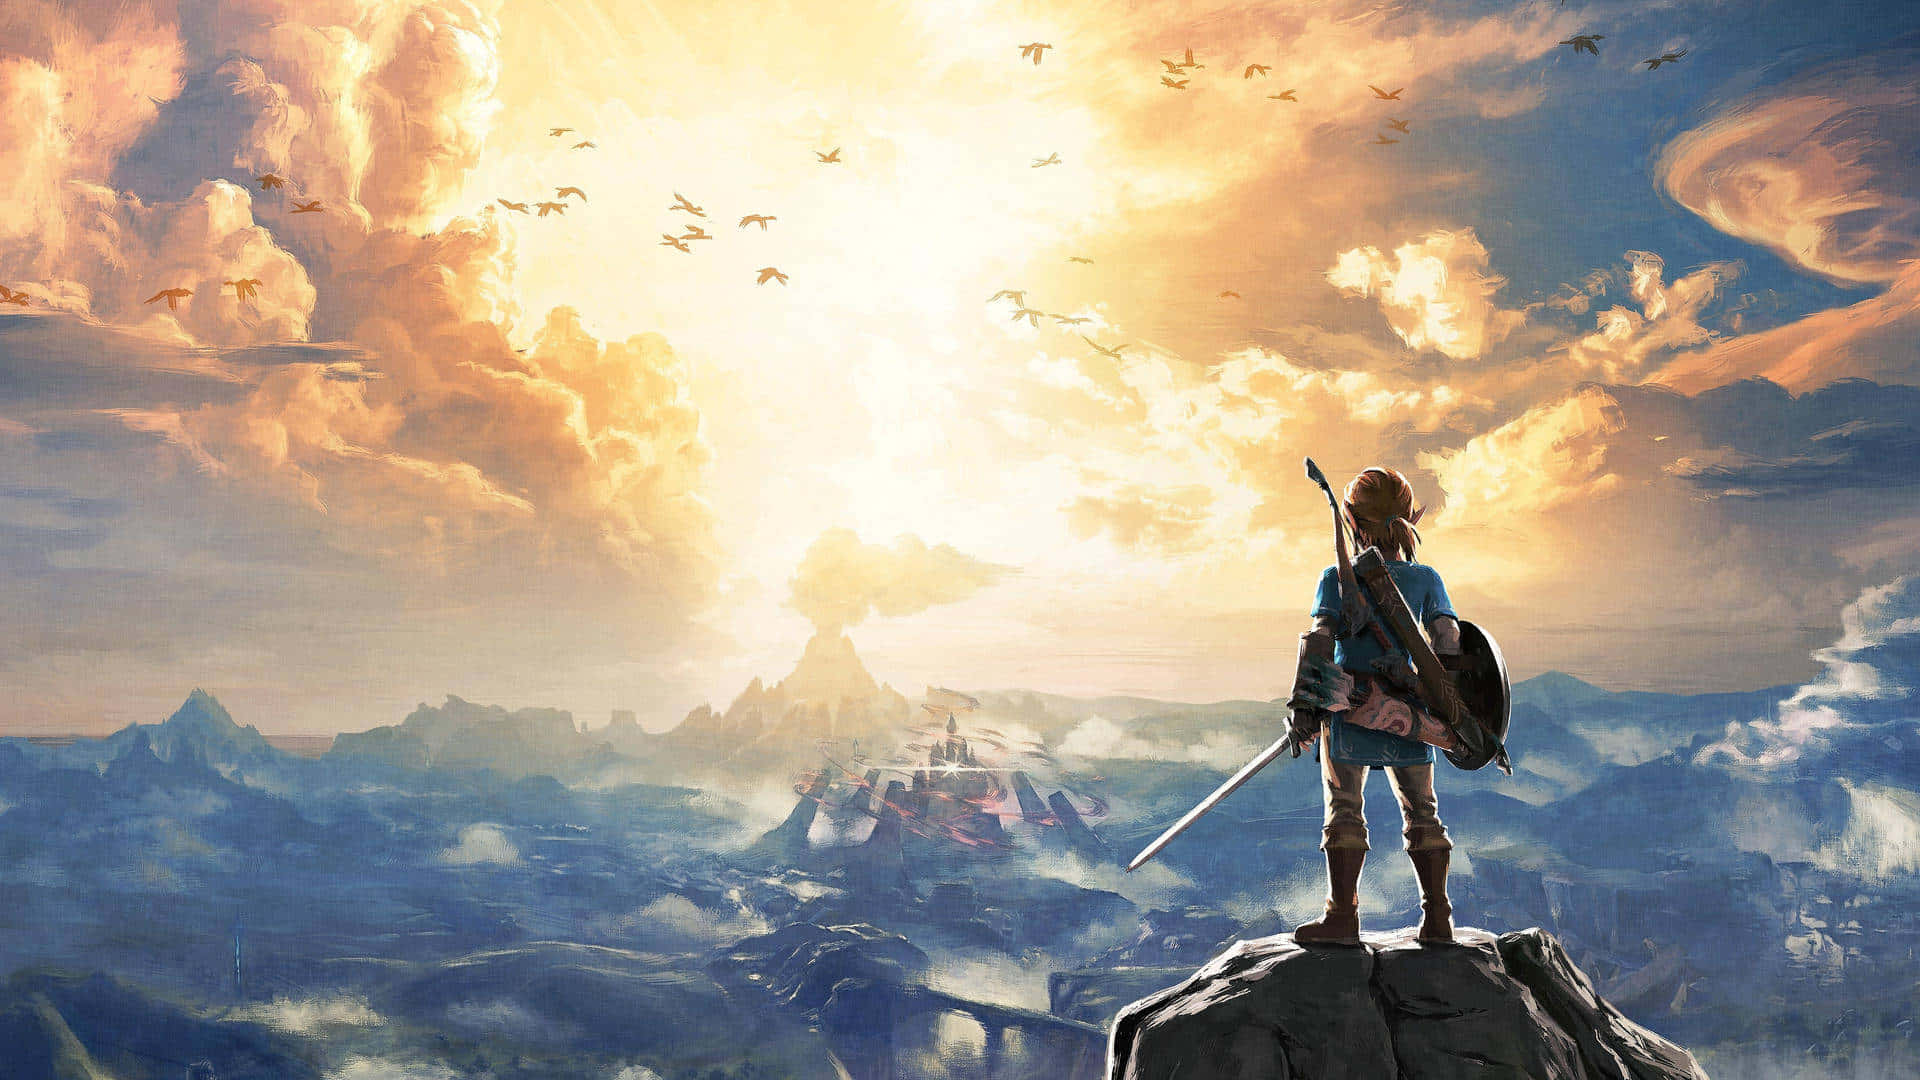 Majestic Landscape of Hyrule in The Legend of Zelda: Breath of the Wild